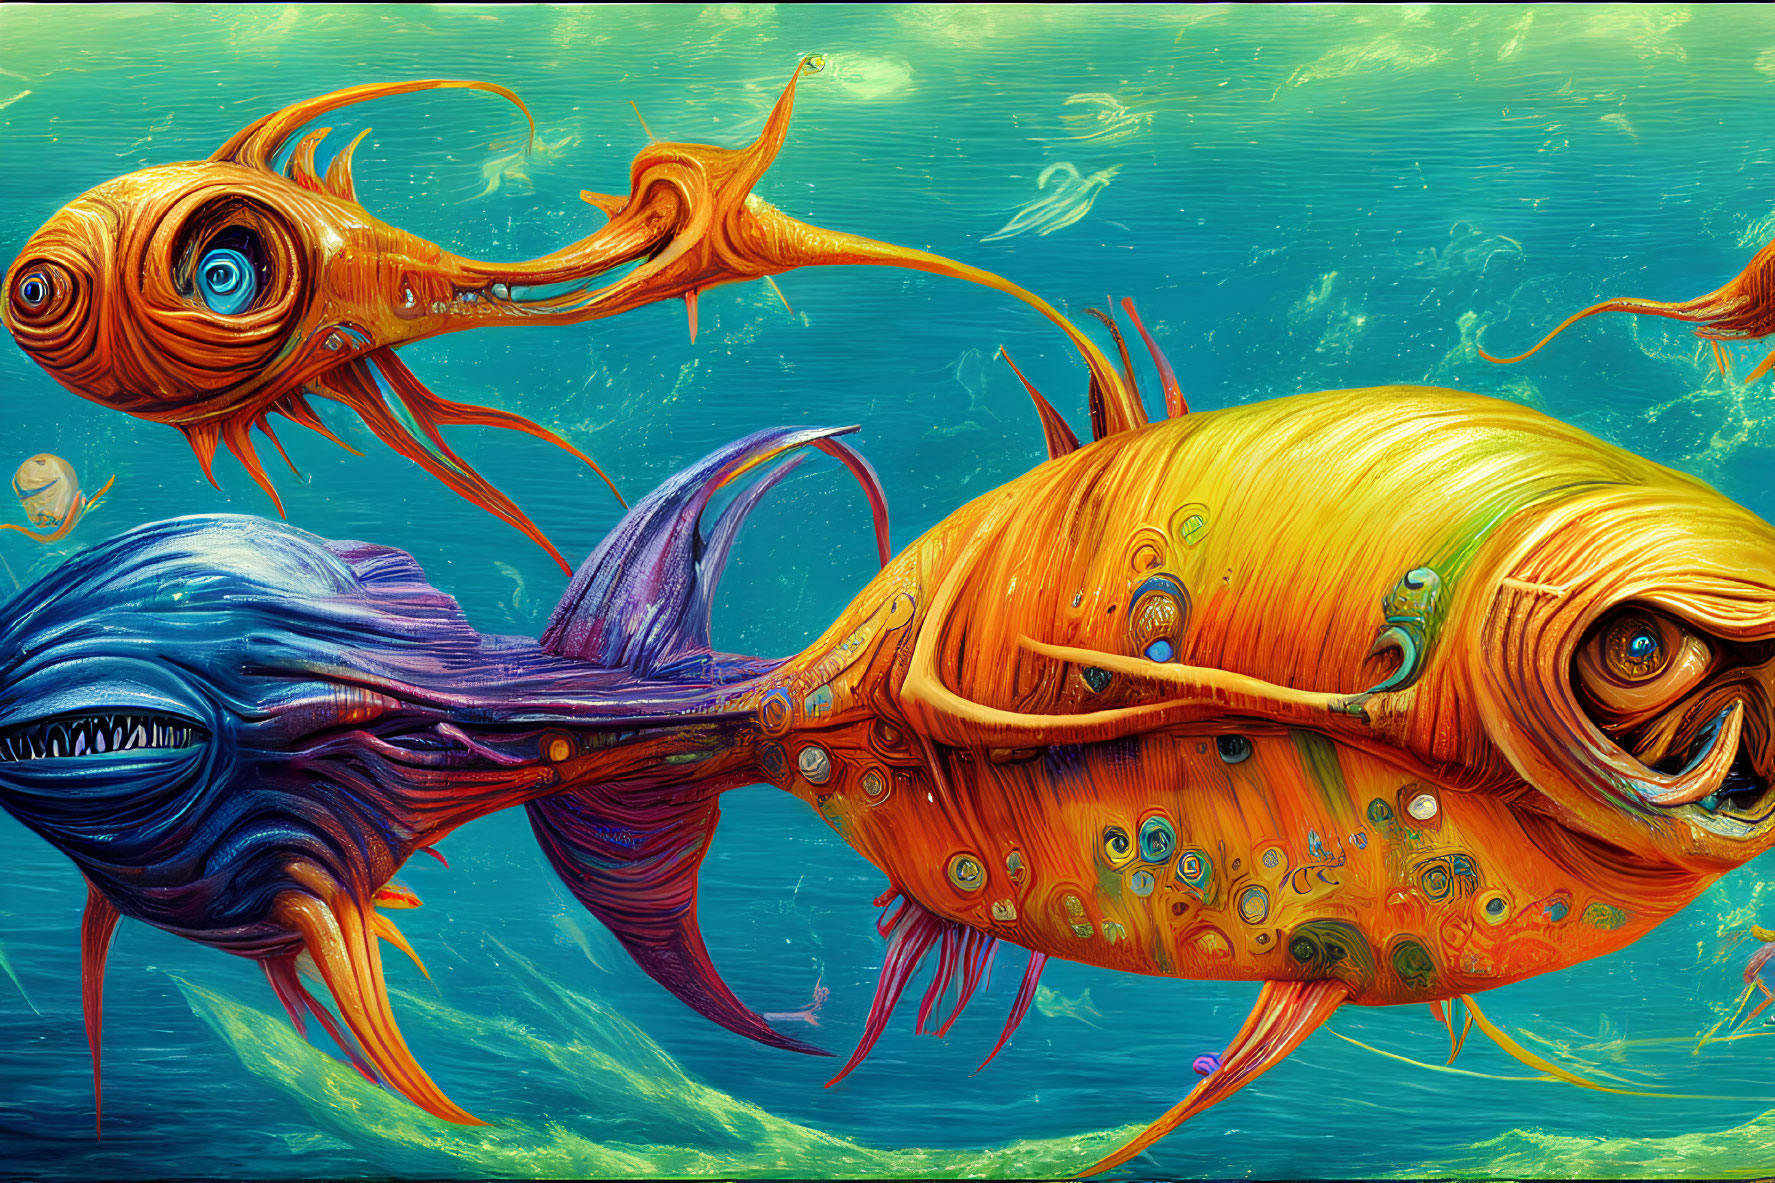 Colorful surreal fish in a vibrant digital underwater scene